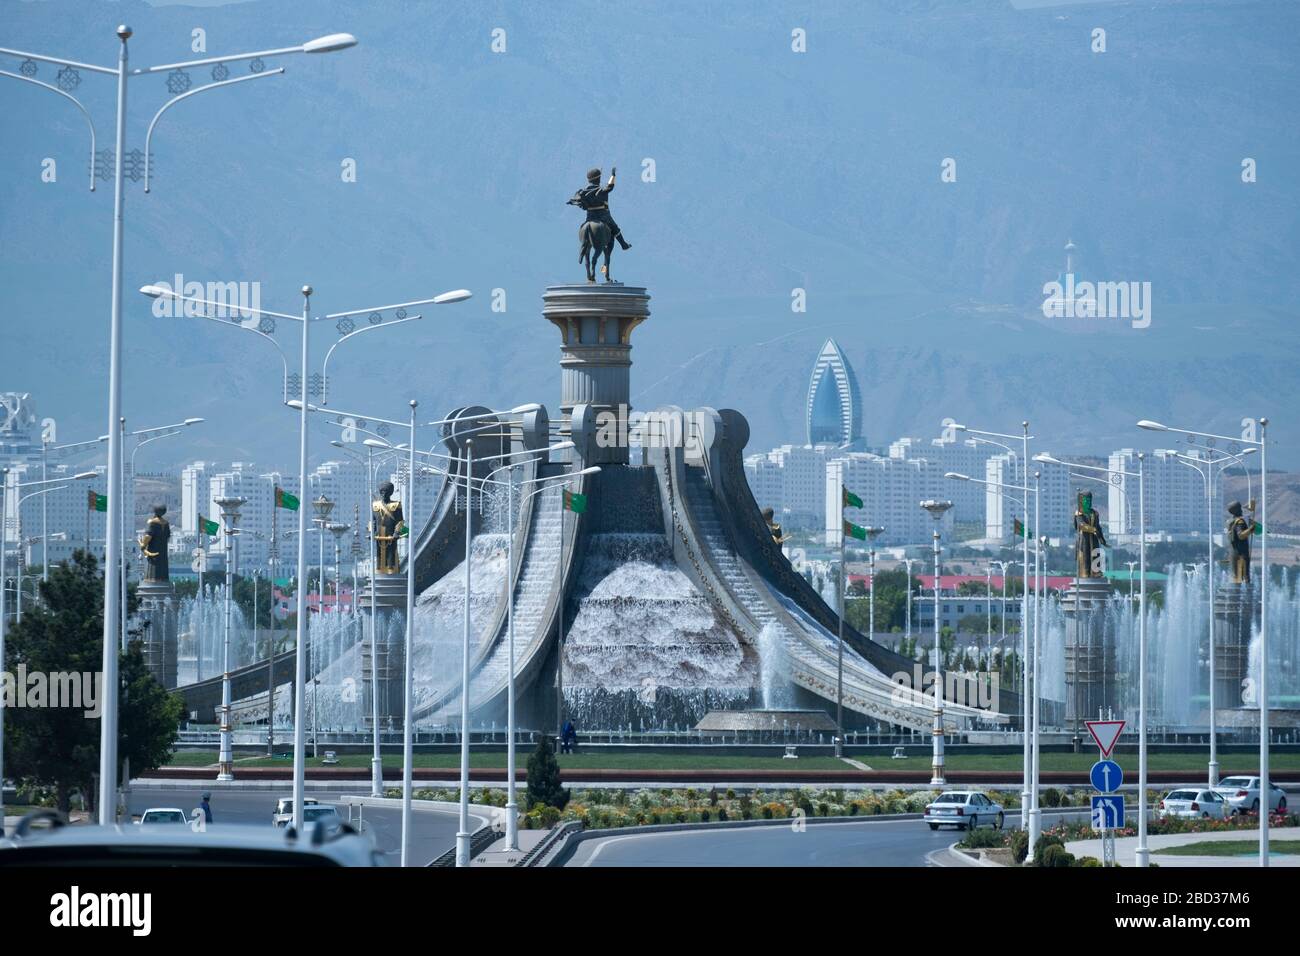 Ashgabat scupture monuments celebrating Turkmenistan along the roads of the Central Asian capital Stock Photo